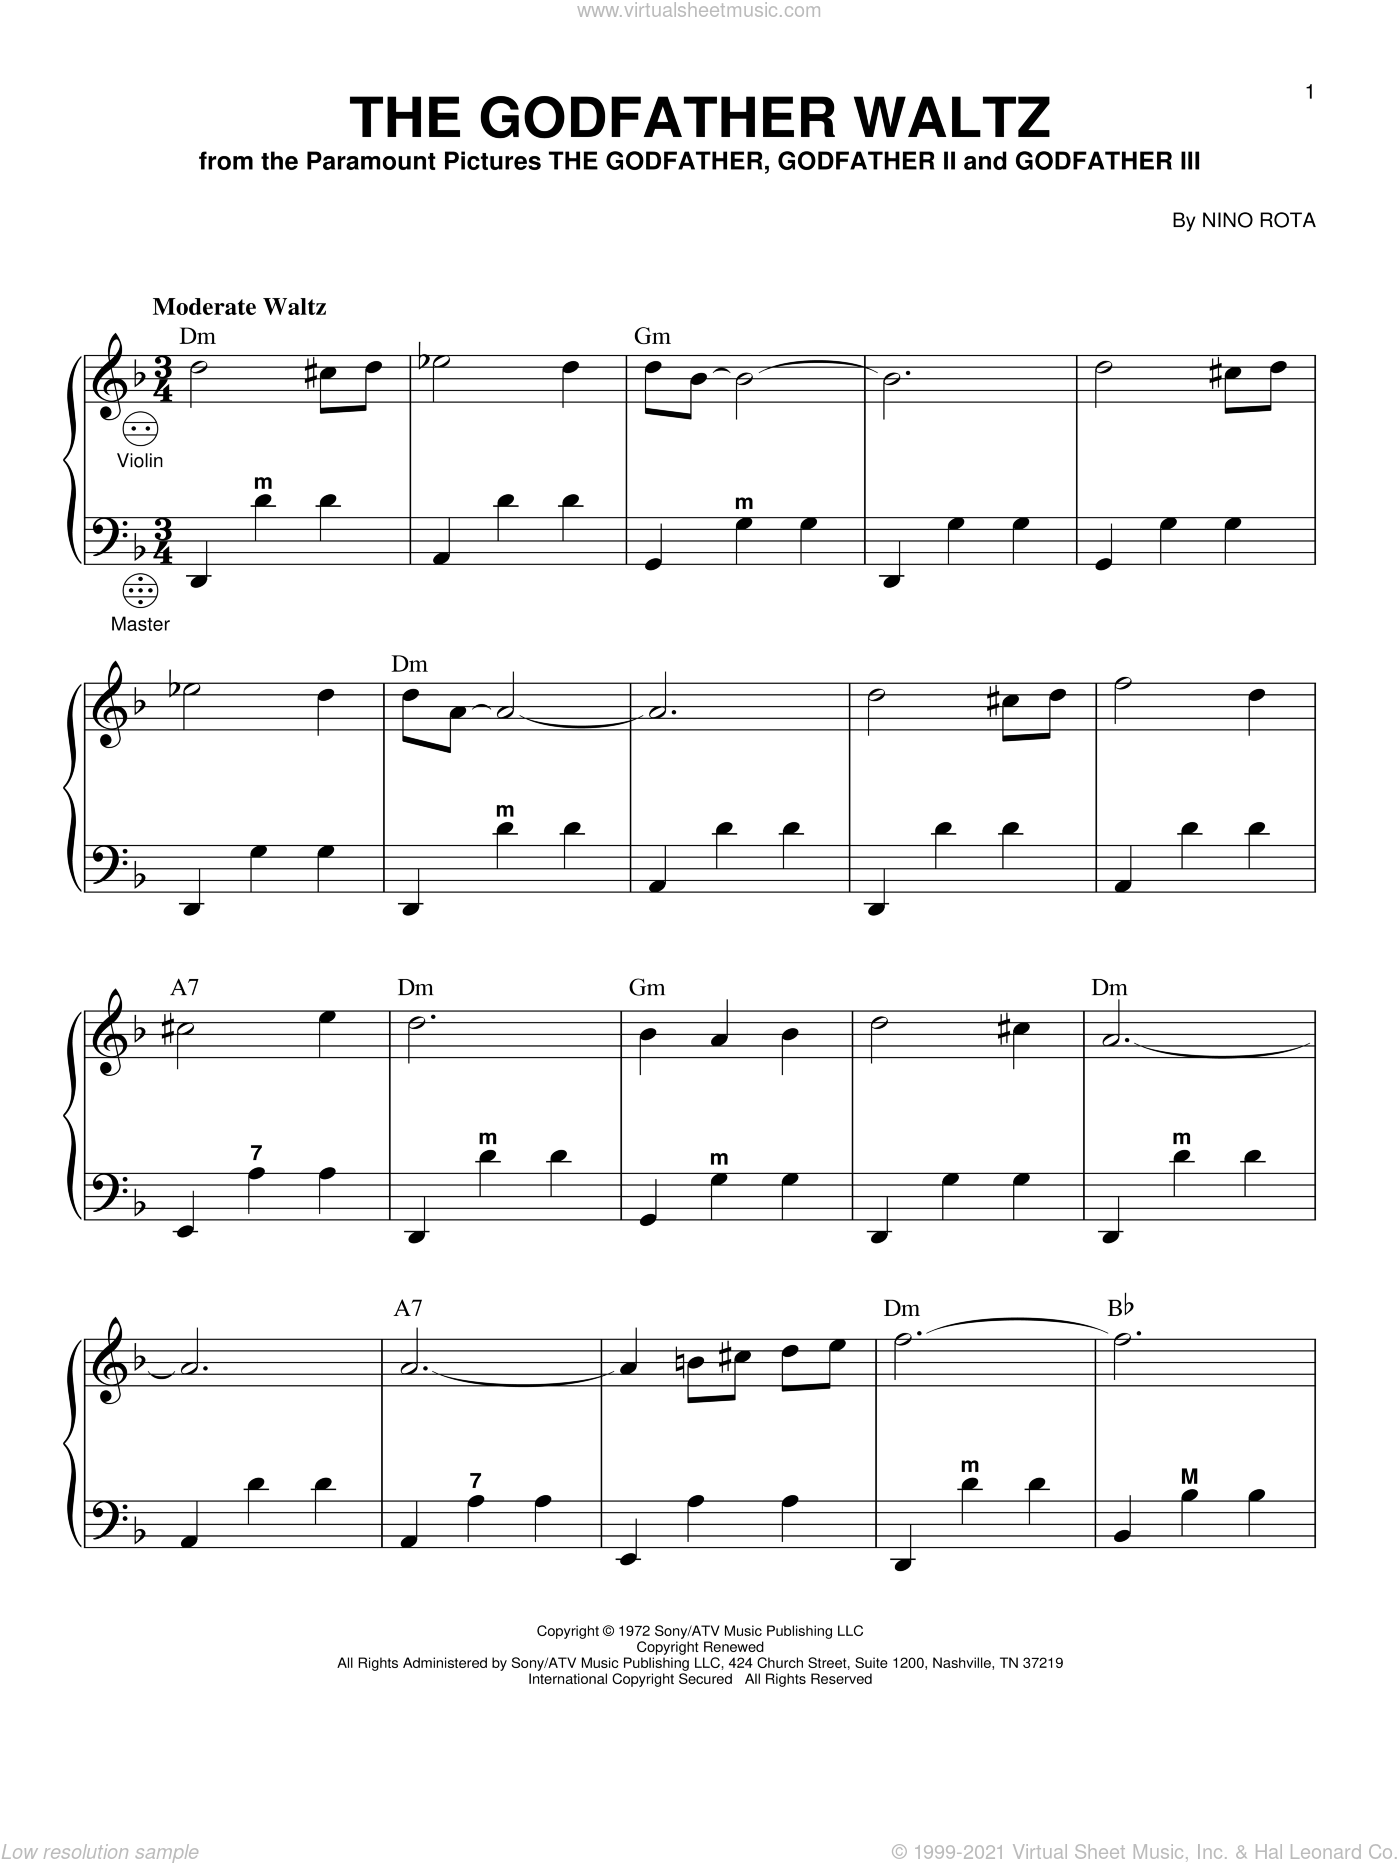 Mambo Jambo (Que Rico El Mambo) sheet music for accordion (PDF)